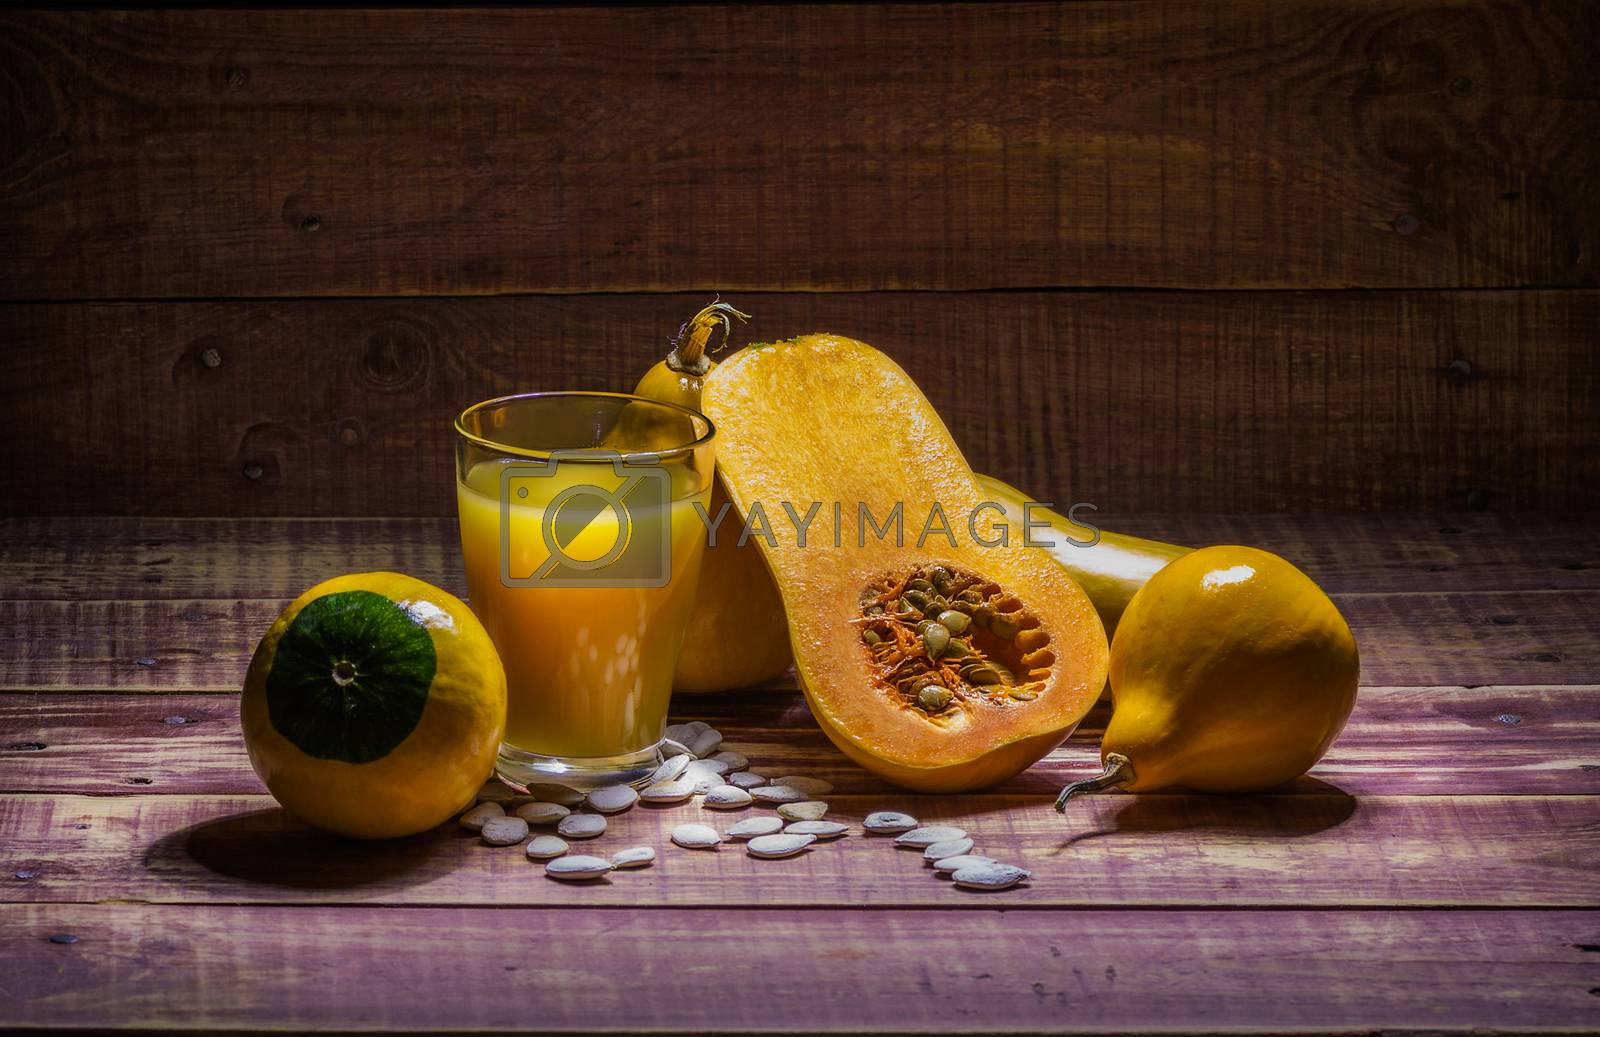 Royalty free image of pumpkin juice by dmitry_derenyuk